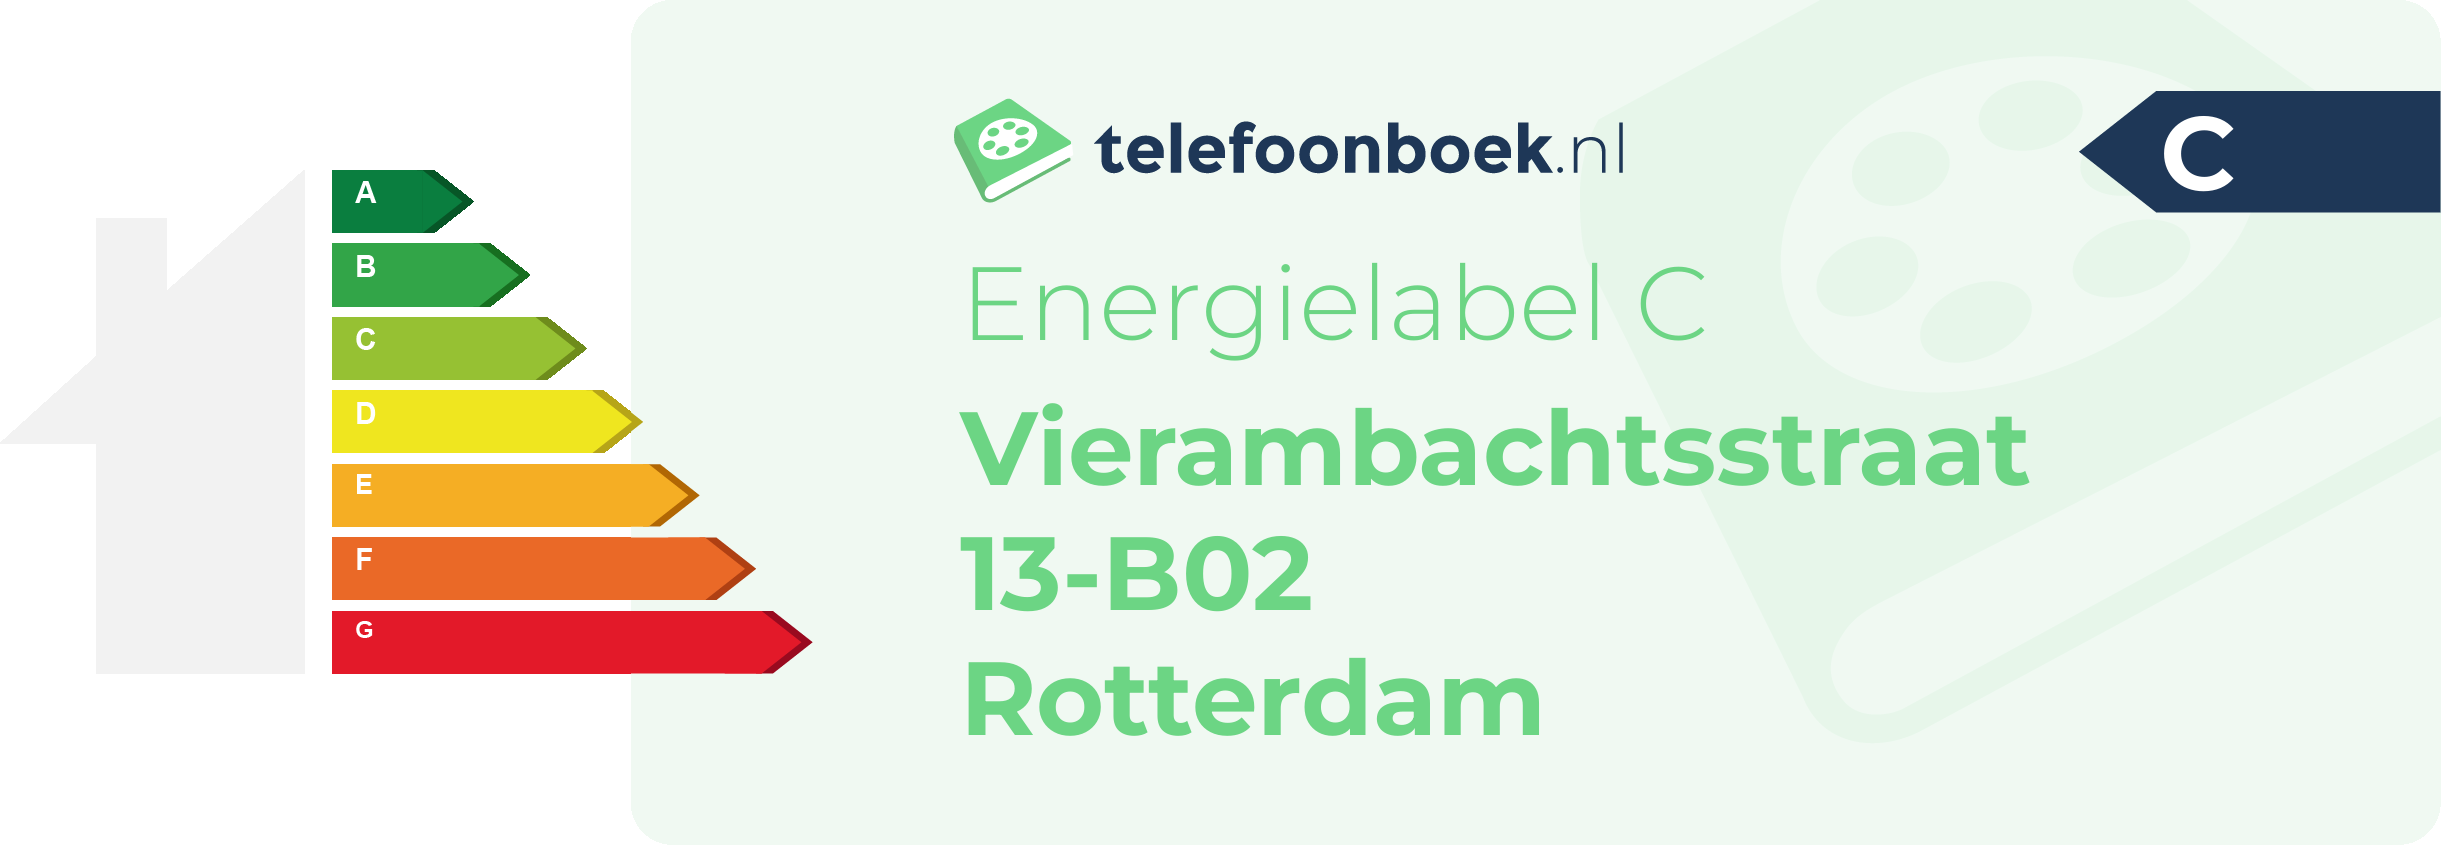 Energielabel Vierambachtsstraat 13-B02 Rotterdam